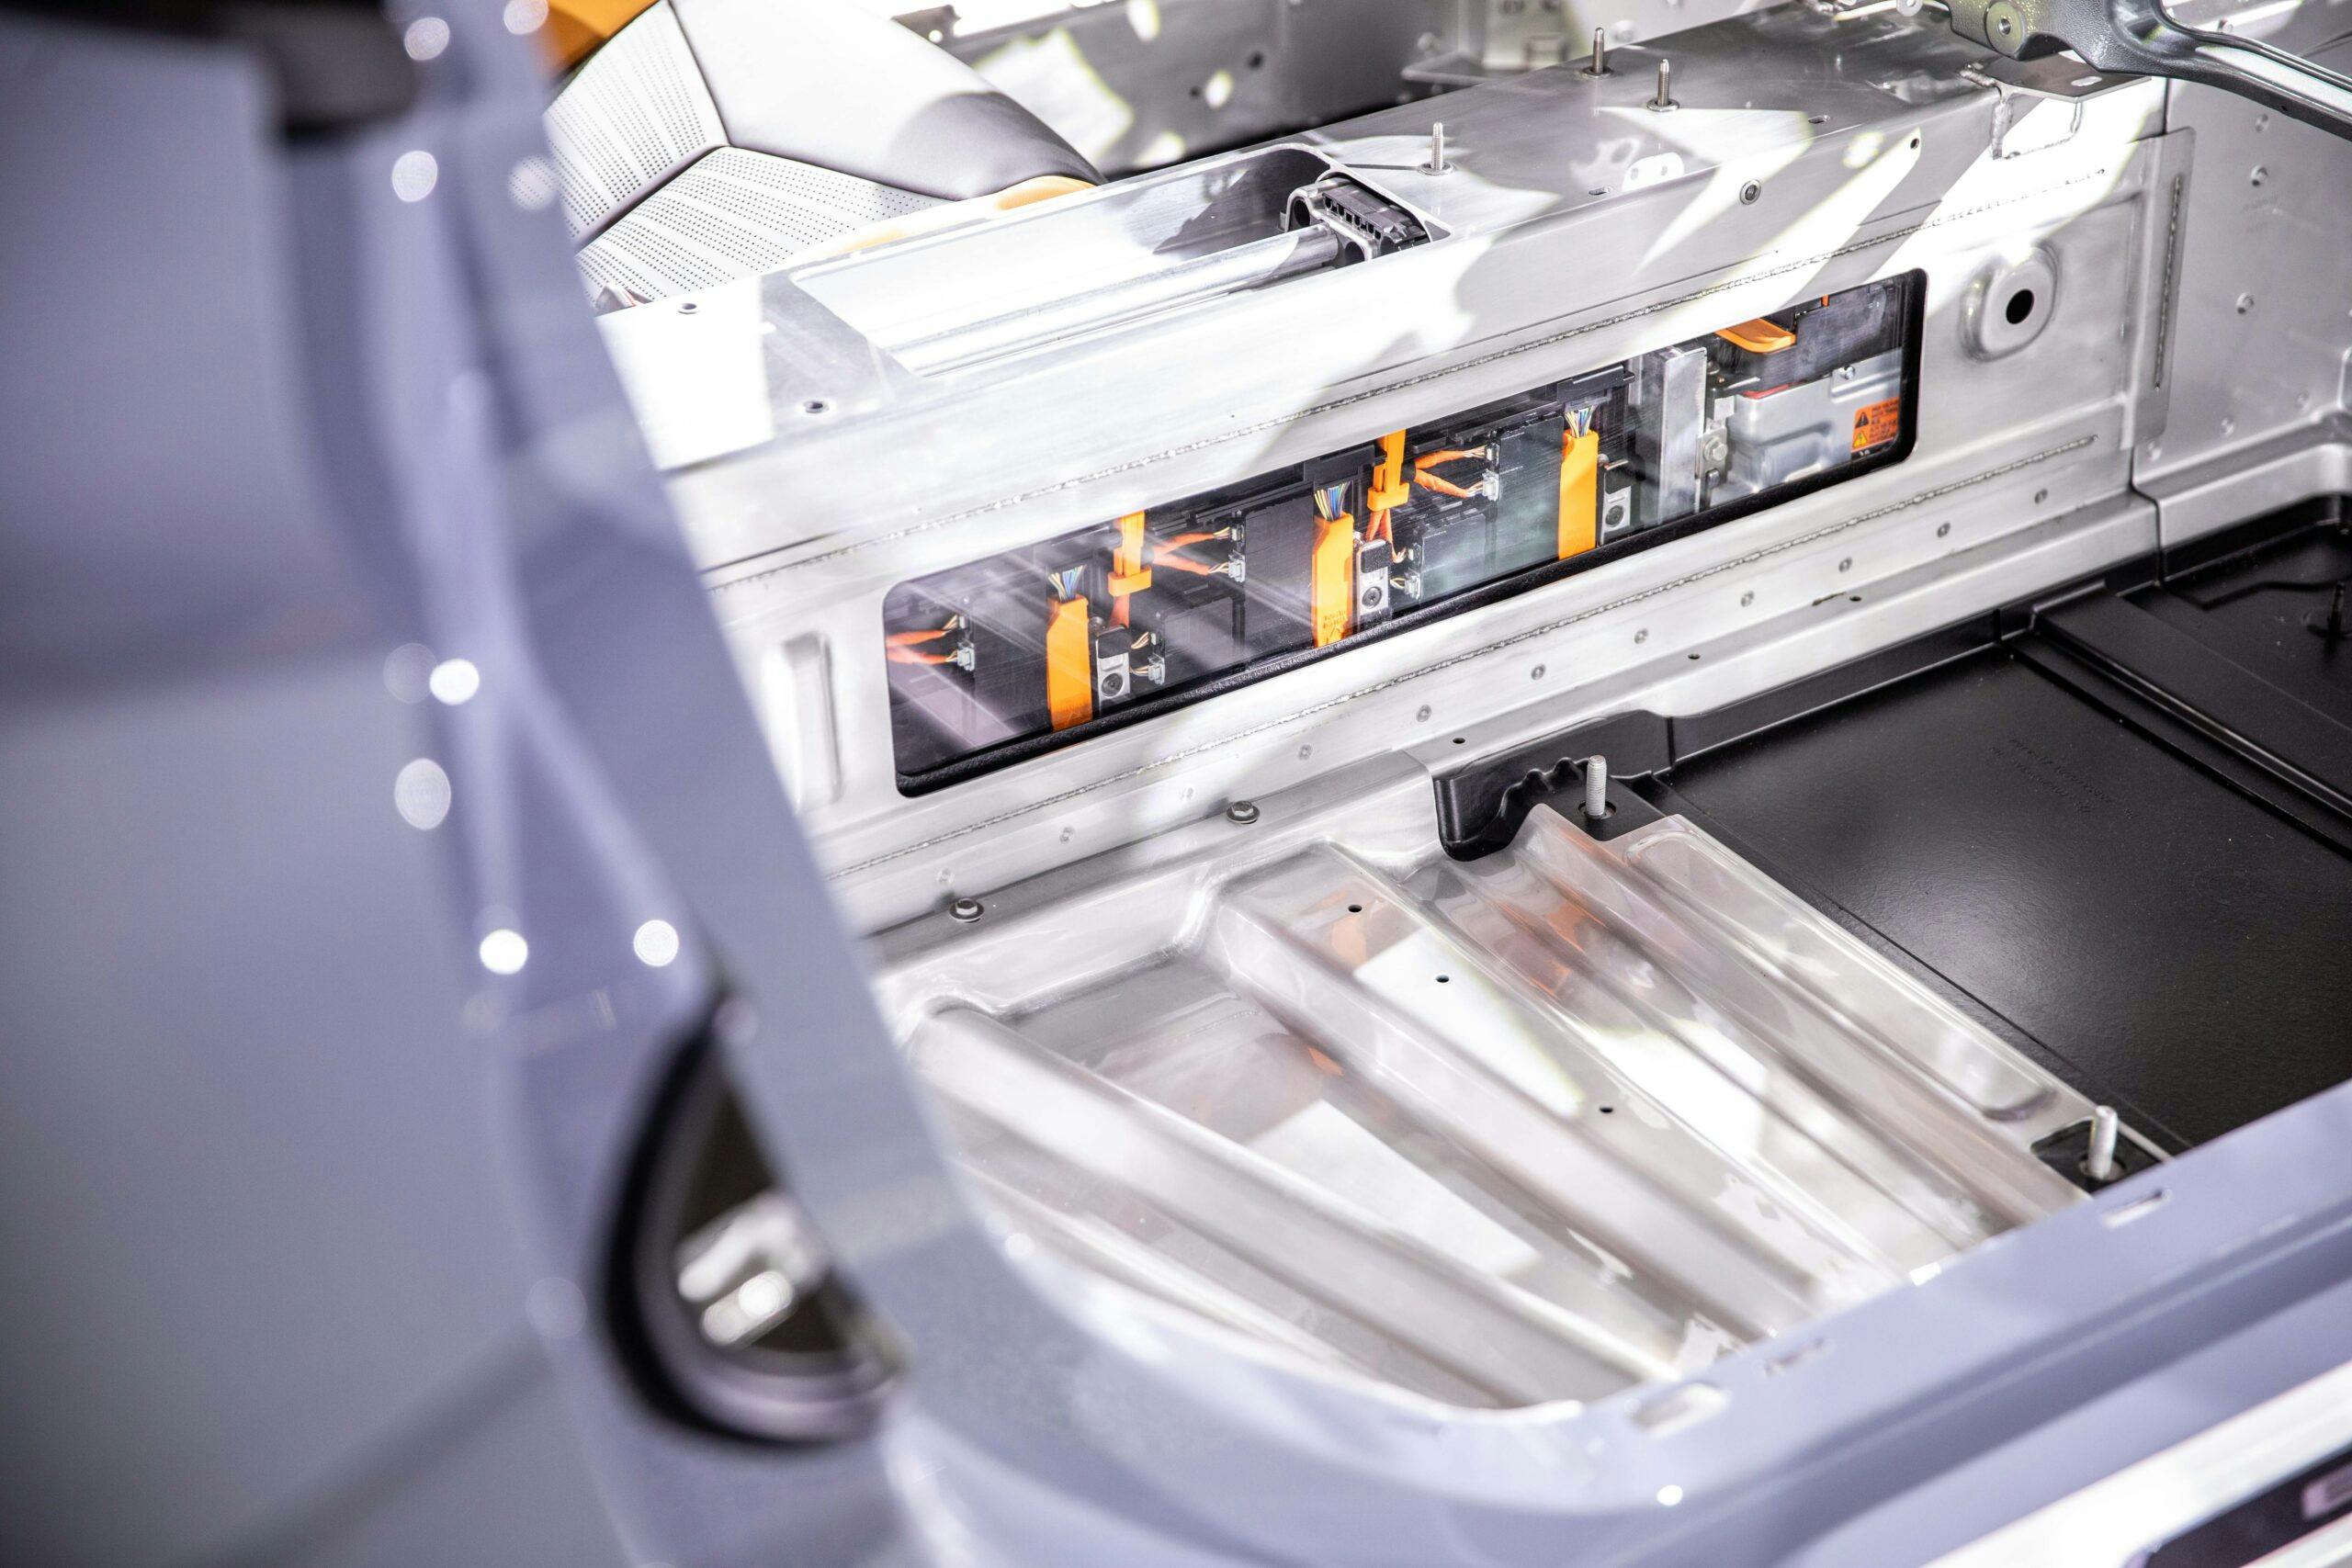 New Corvette E-Ray hybrid battery bank